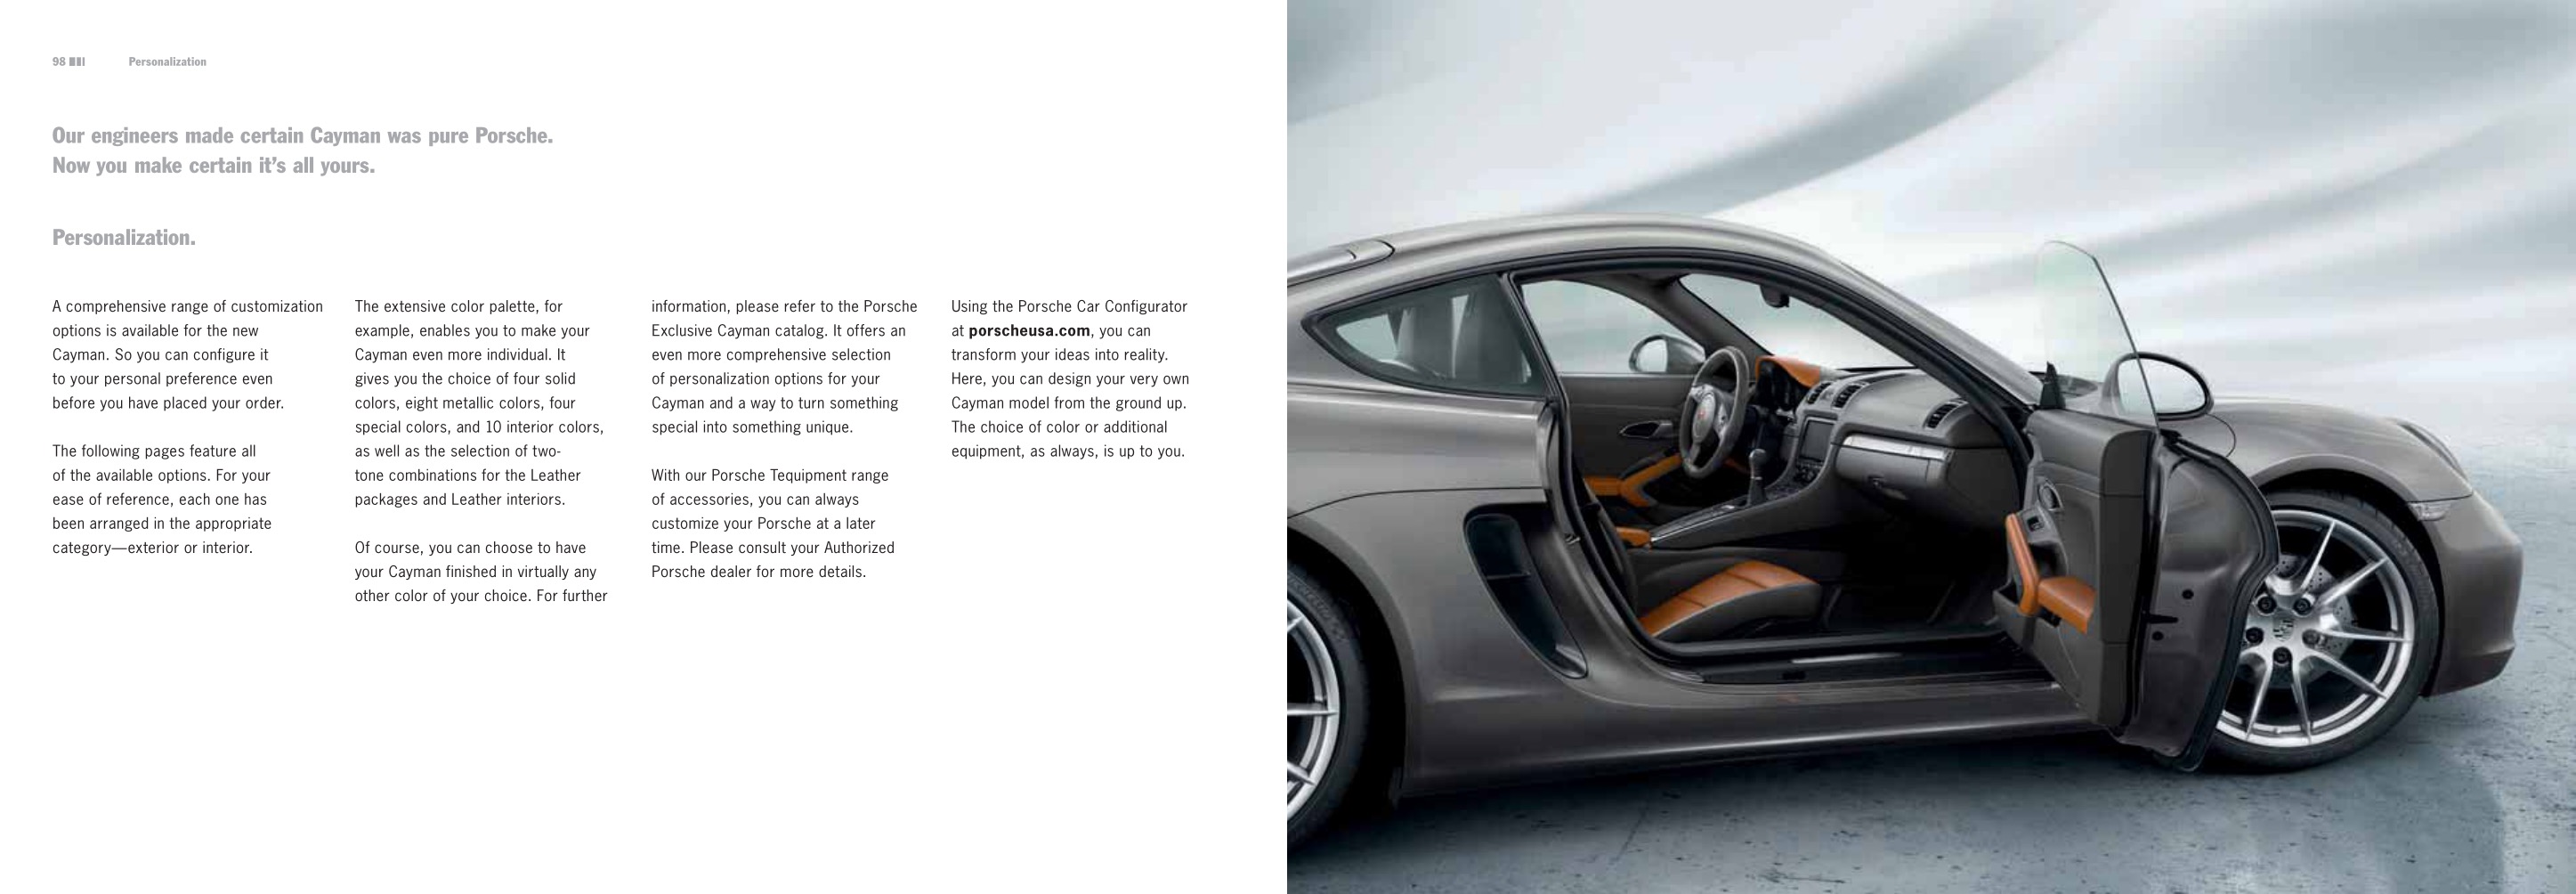 2014 Porsche Cayman Brochure Page 20